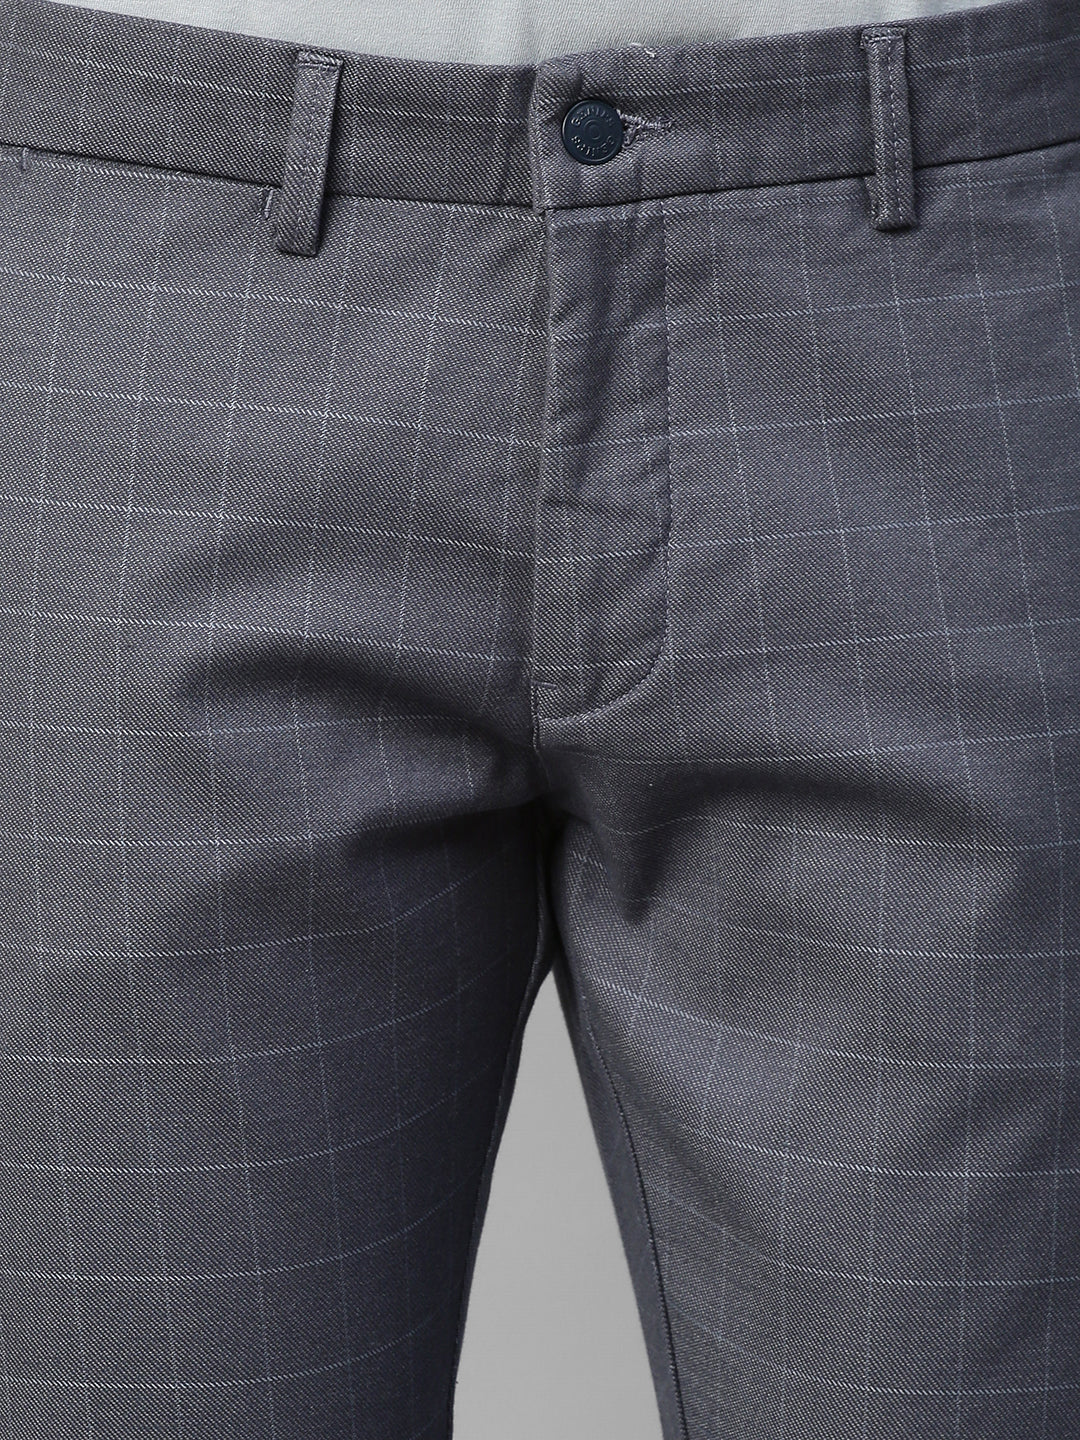 Genips Men's Blue Mirage Cotton Stretch Caribbean Slim Fit Self Design Trousers